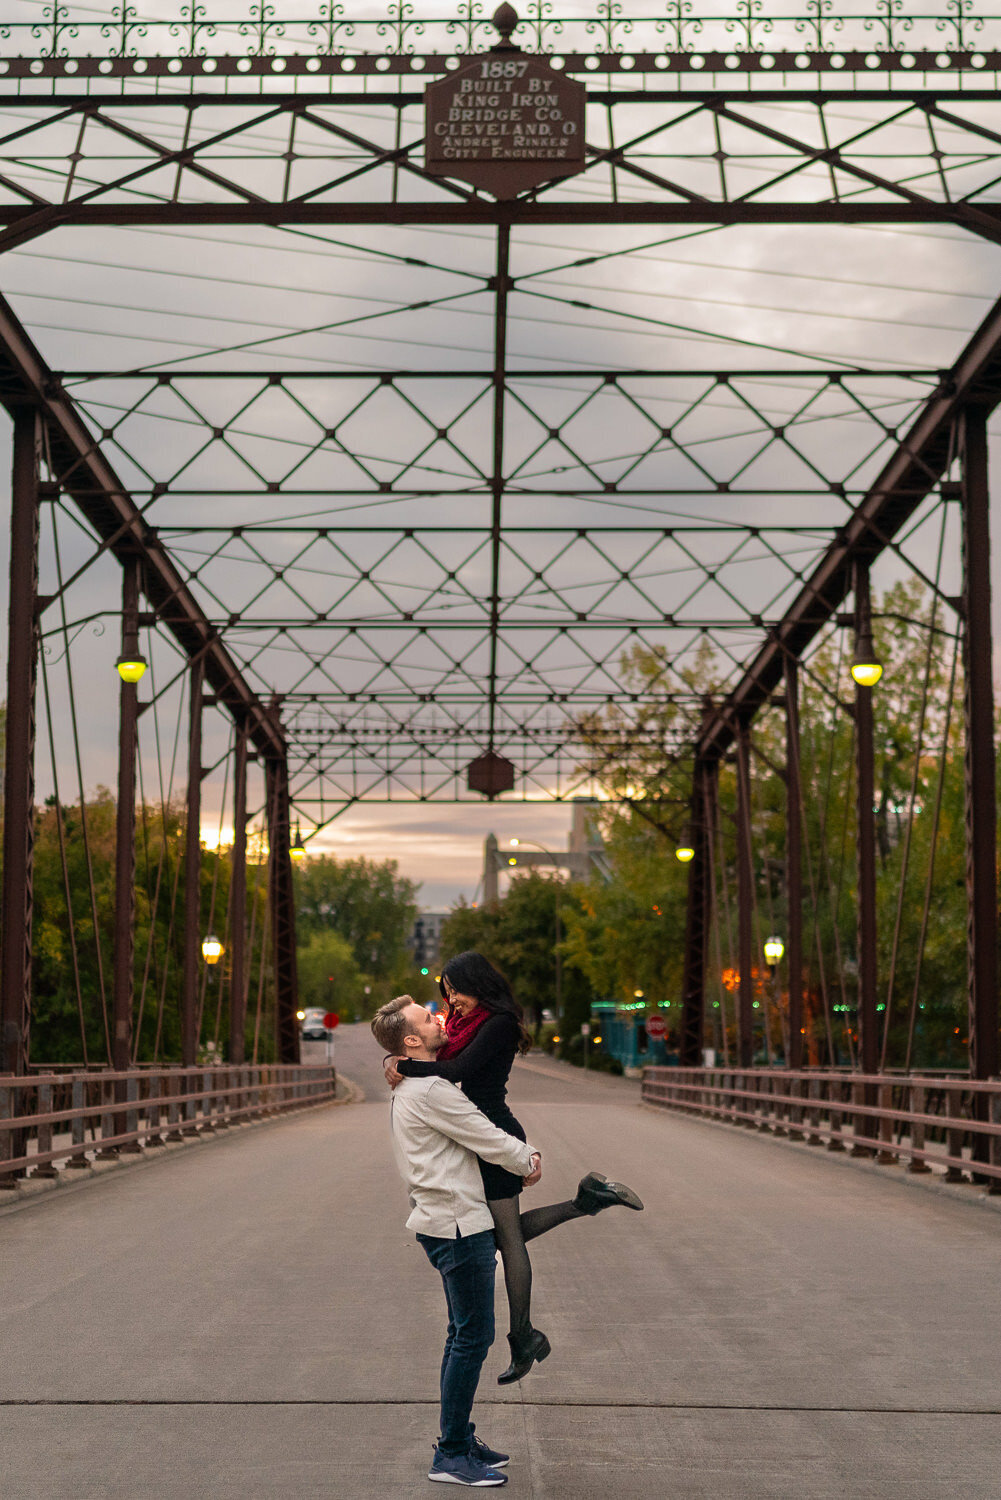 Man lifts woman in black dress on the bridge on Nicollet Island in Minneapolis, Minnesota.